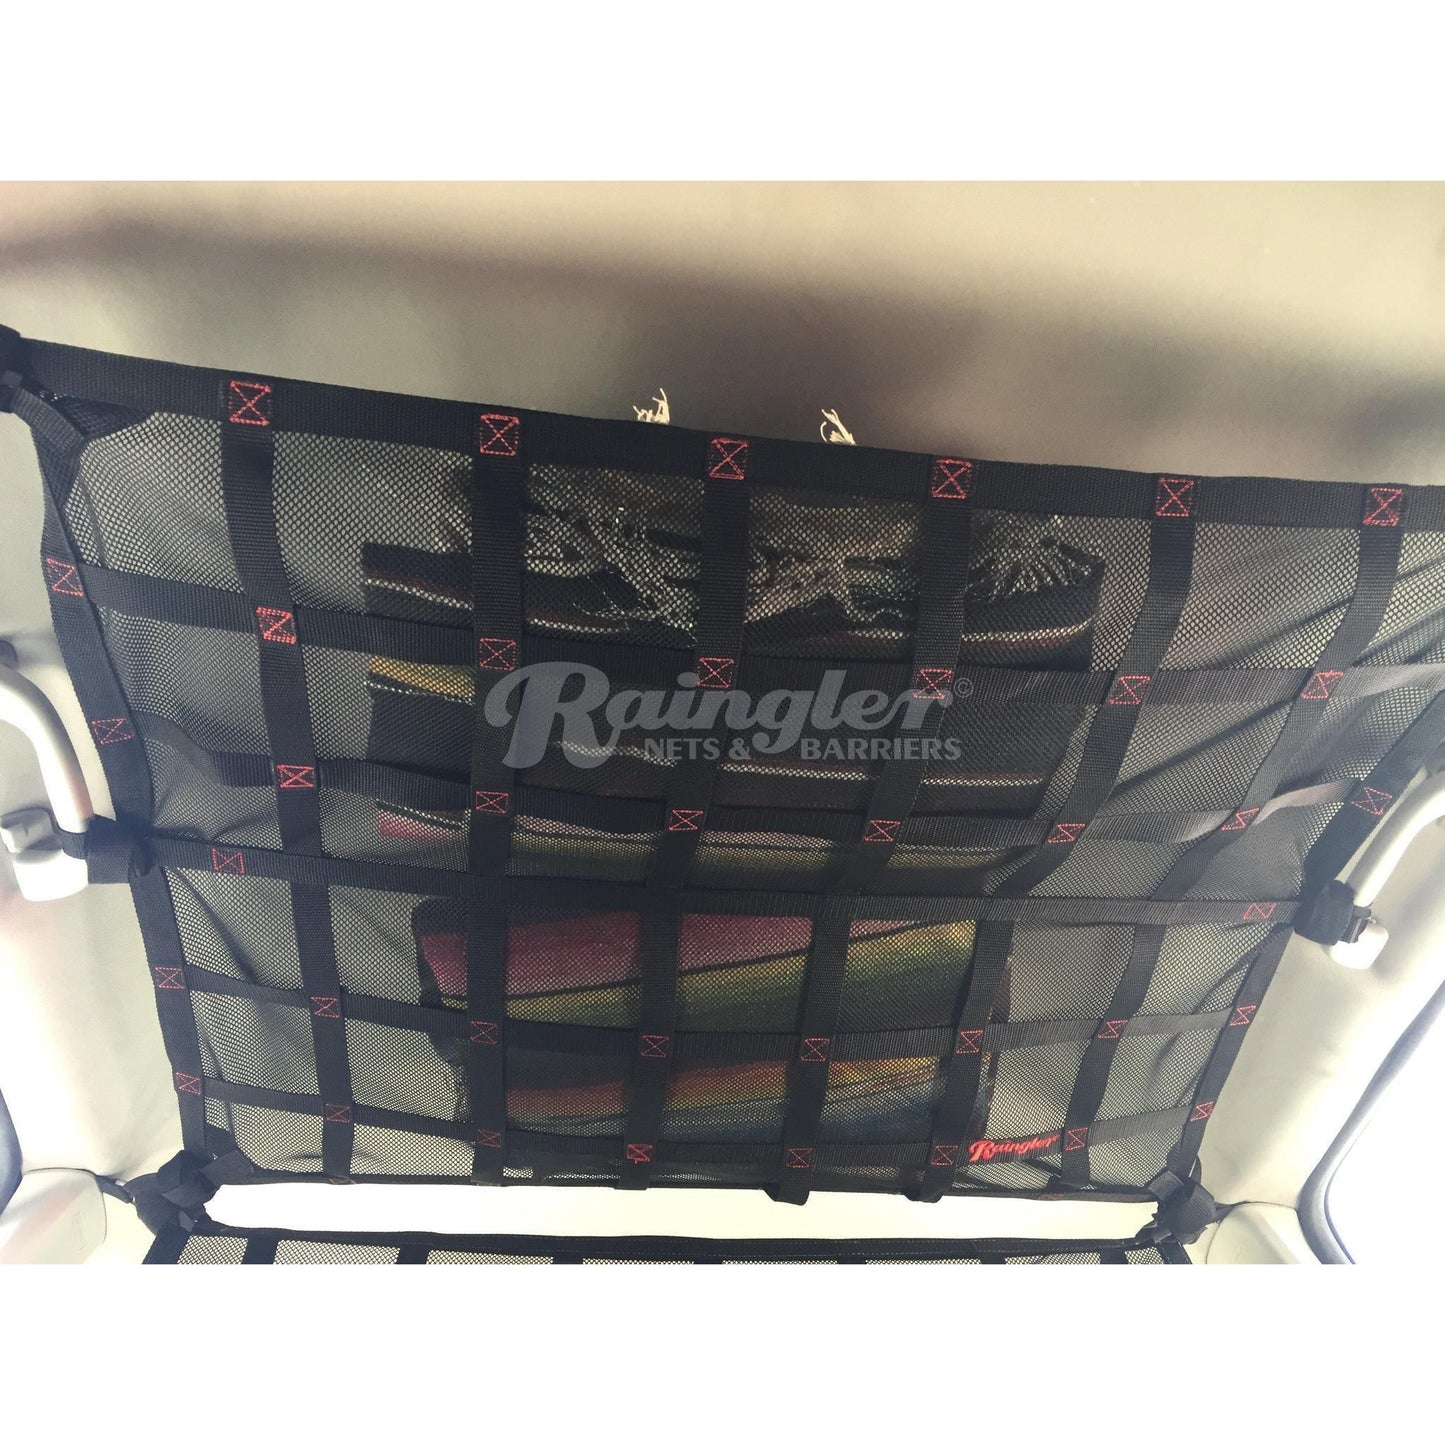 2015 - 2019 Subaru Outback 2nd Row Ceiling Attic Net-Raingler